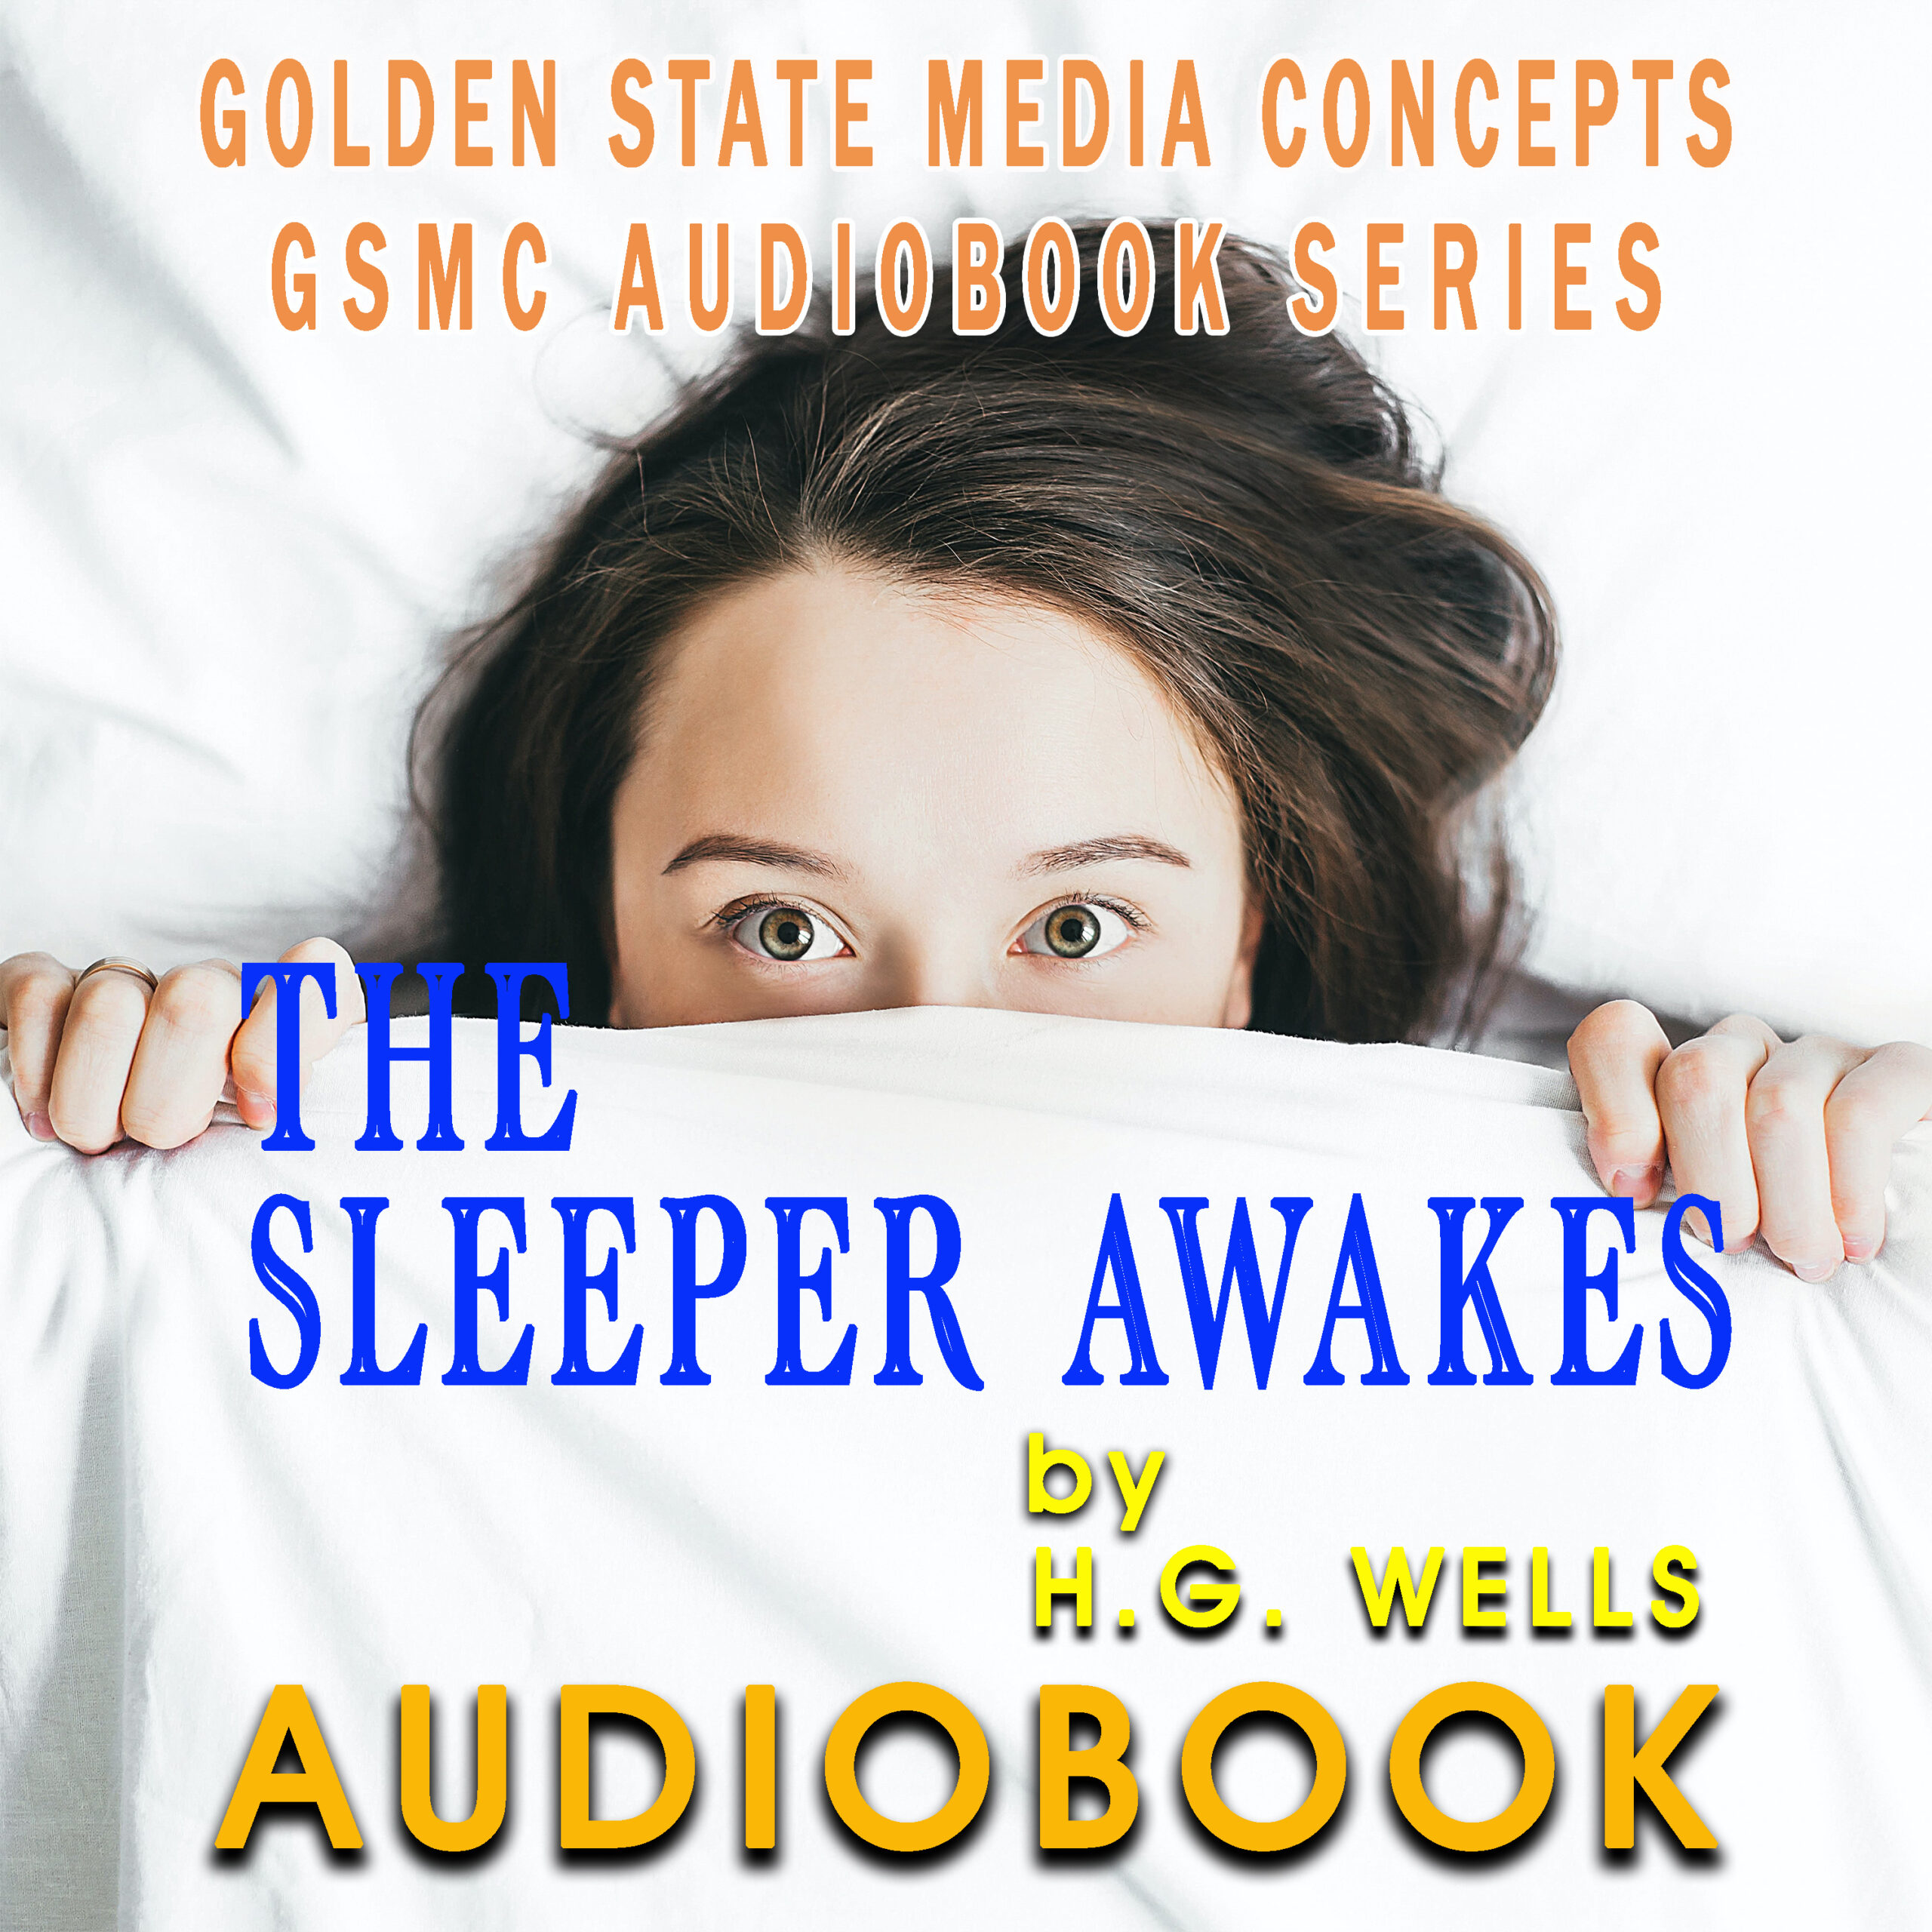 GSMC Audiobook Series: The Sleeper Awakes by H.G. Wells